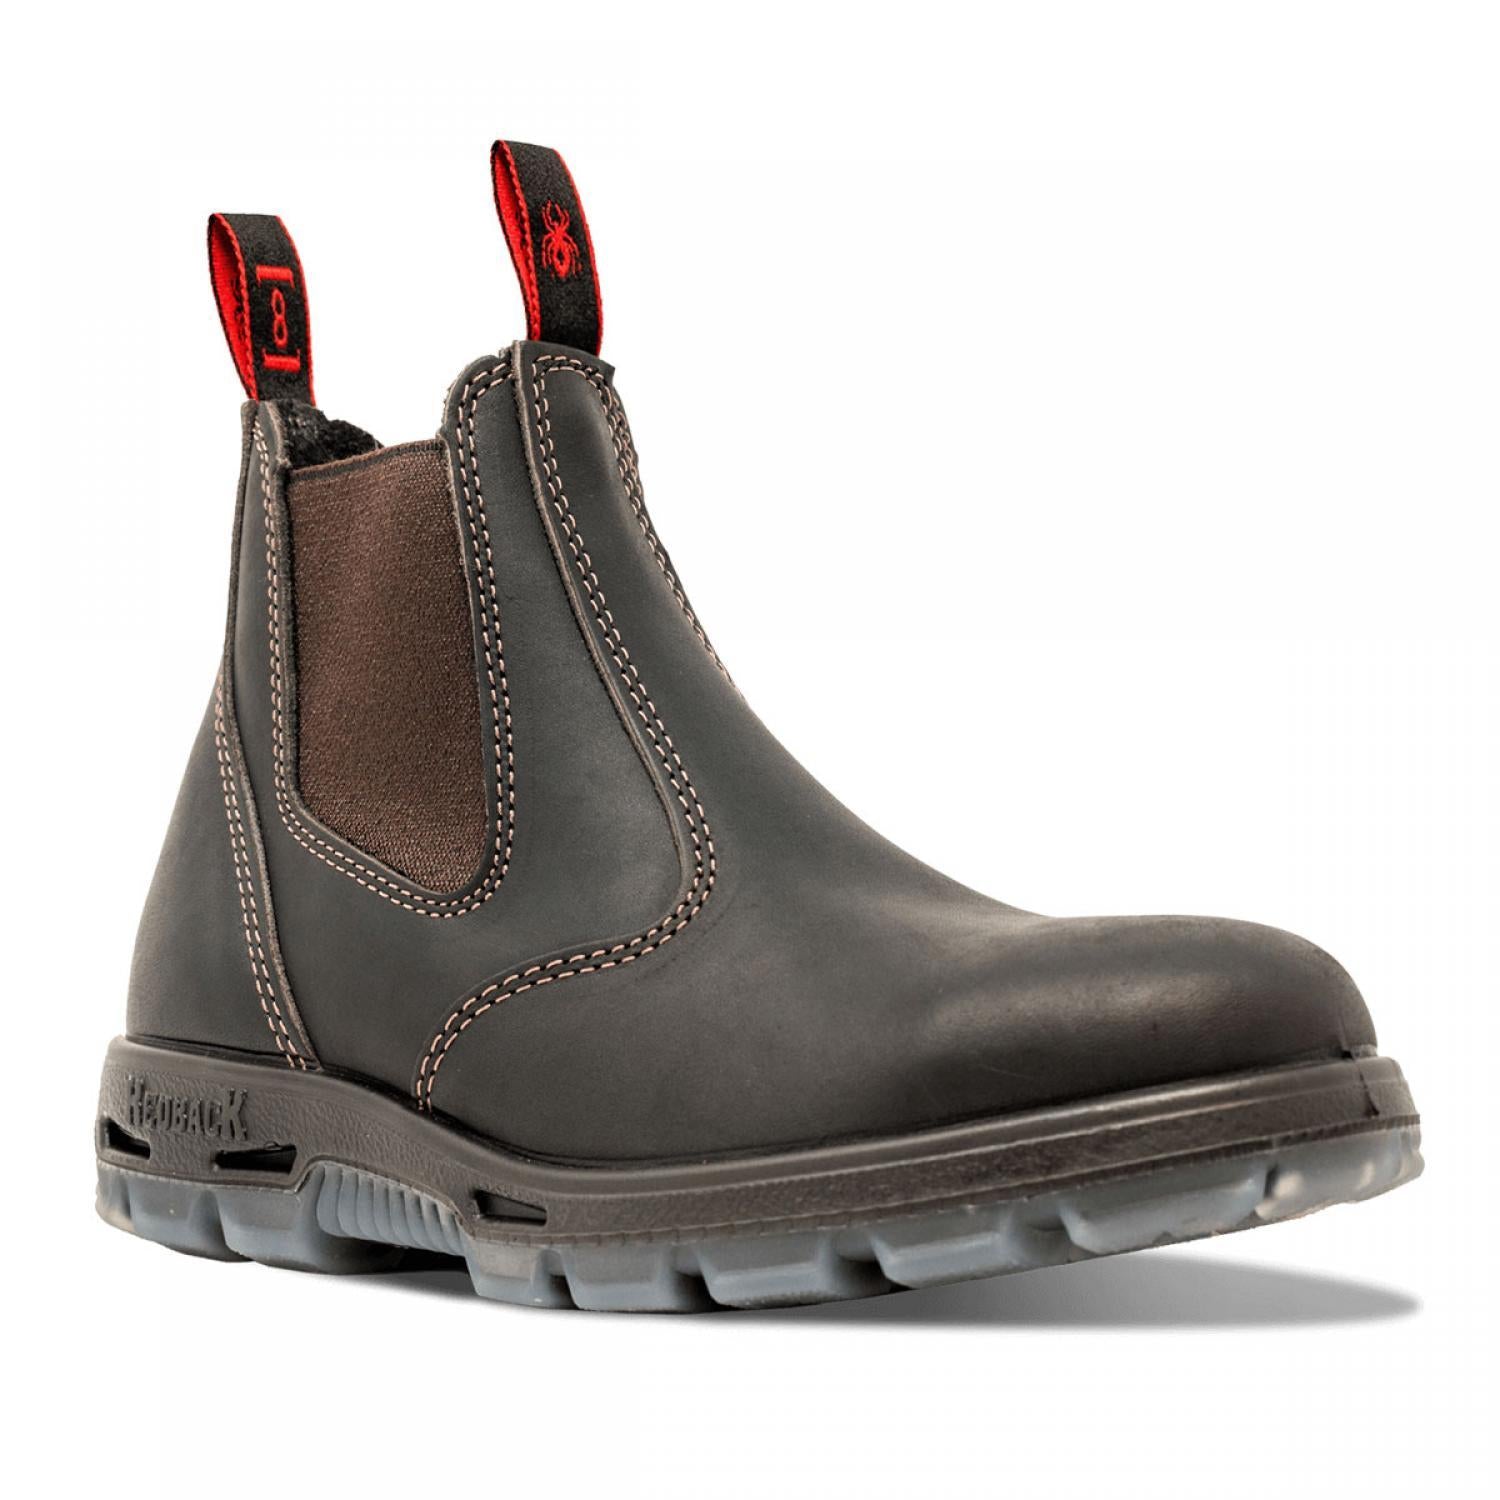 REDBACK USBOK S1 stout brown leather steel toe-cap safety dealer work boot